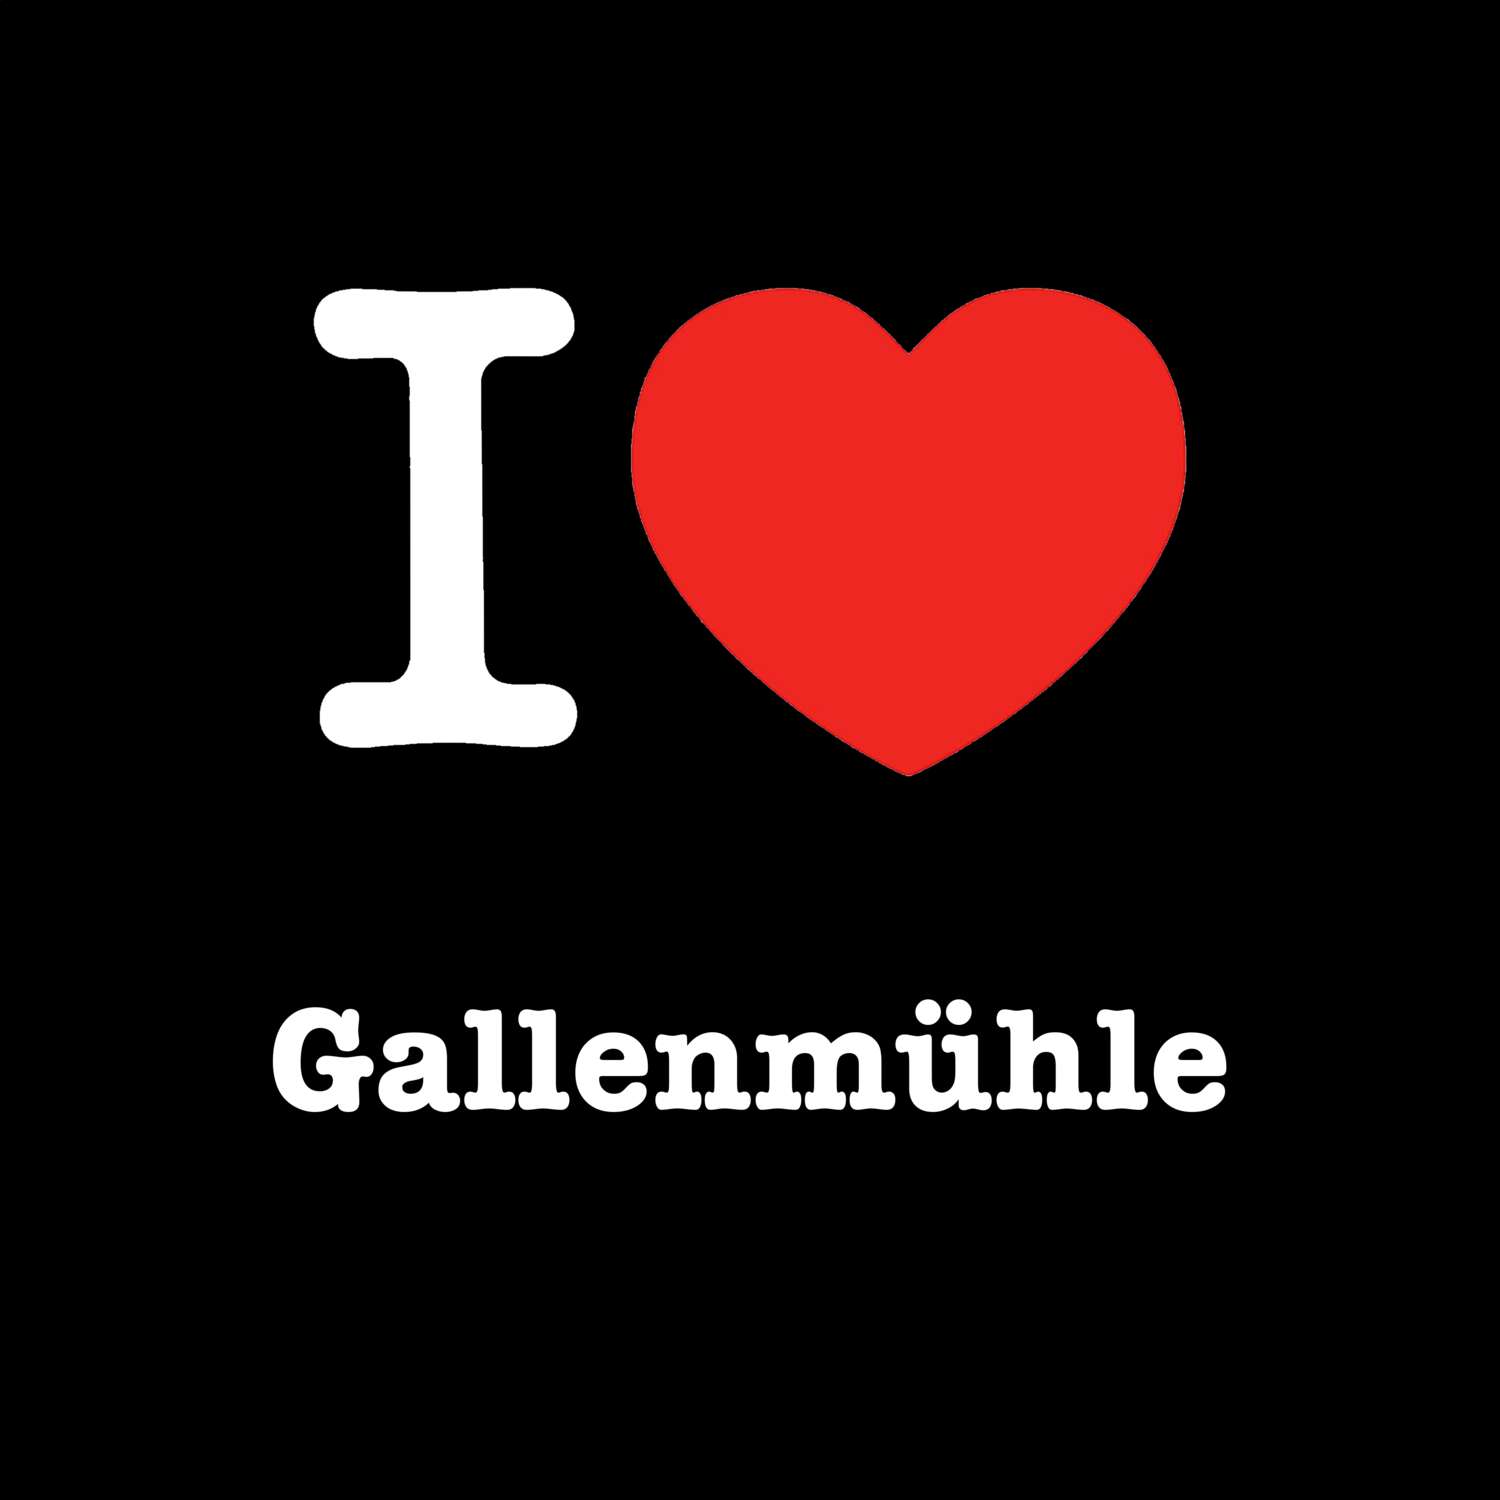 Gallenmühle T-Shirt »I love«